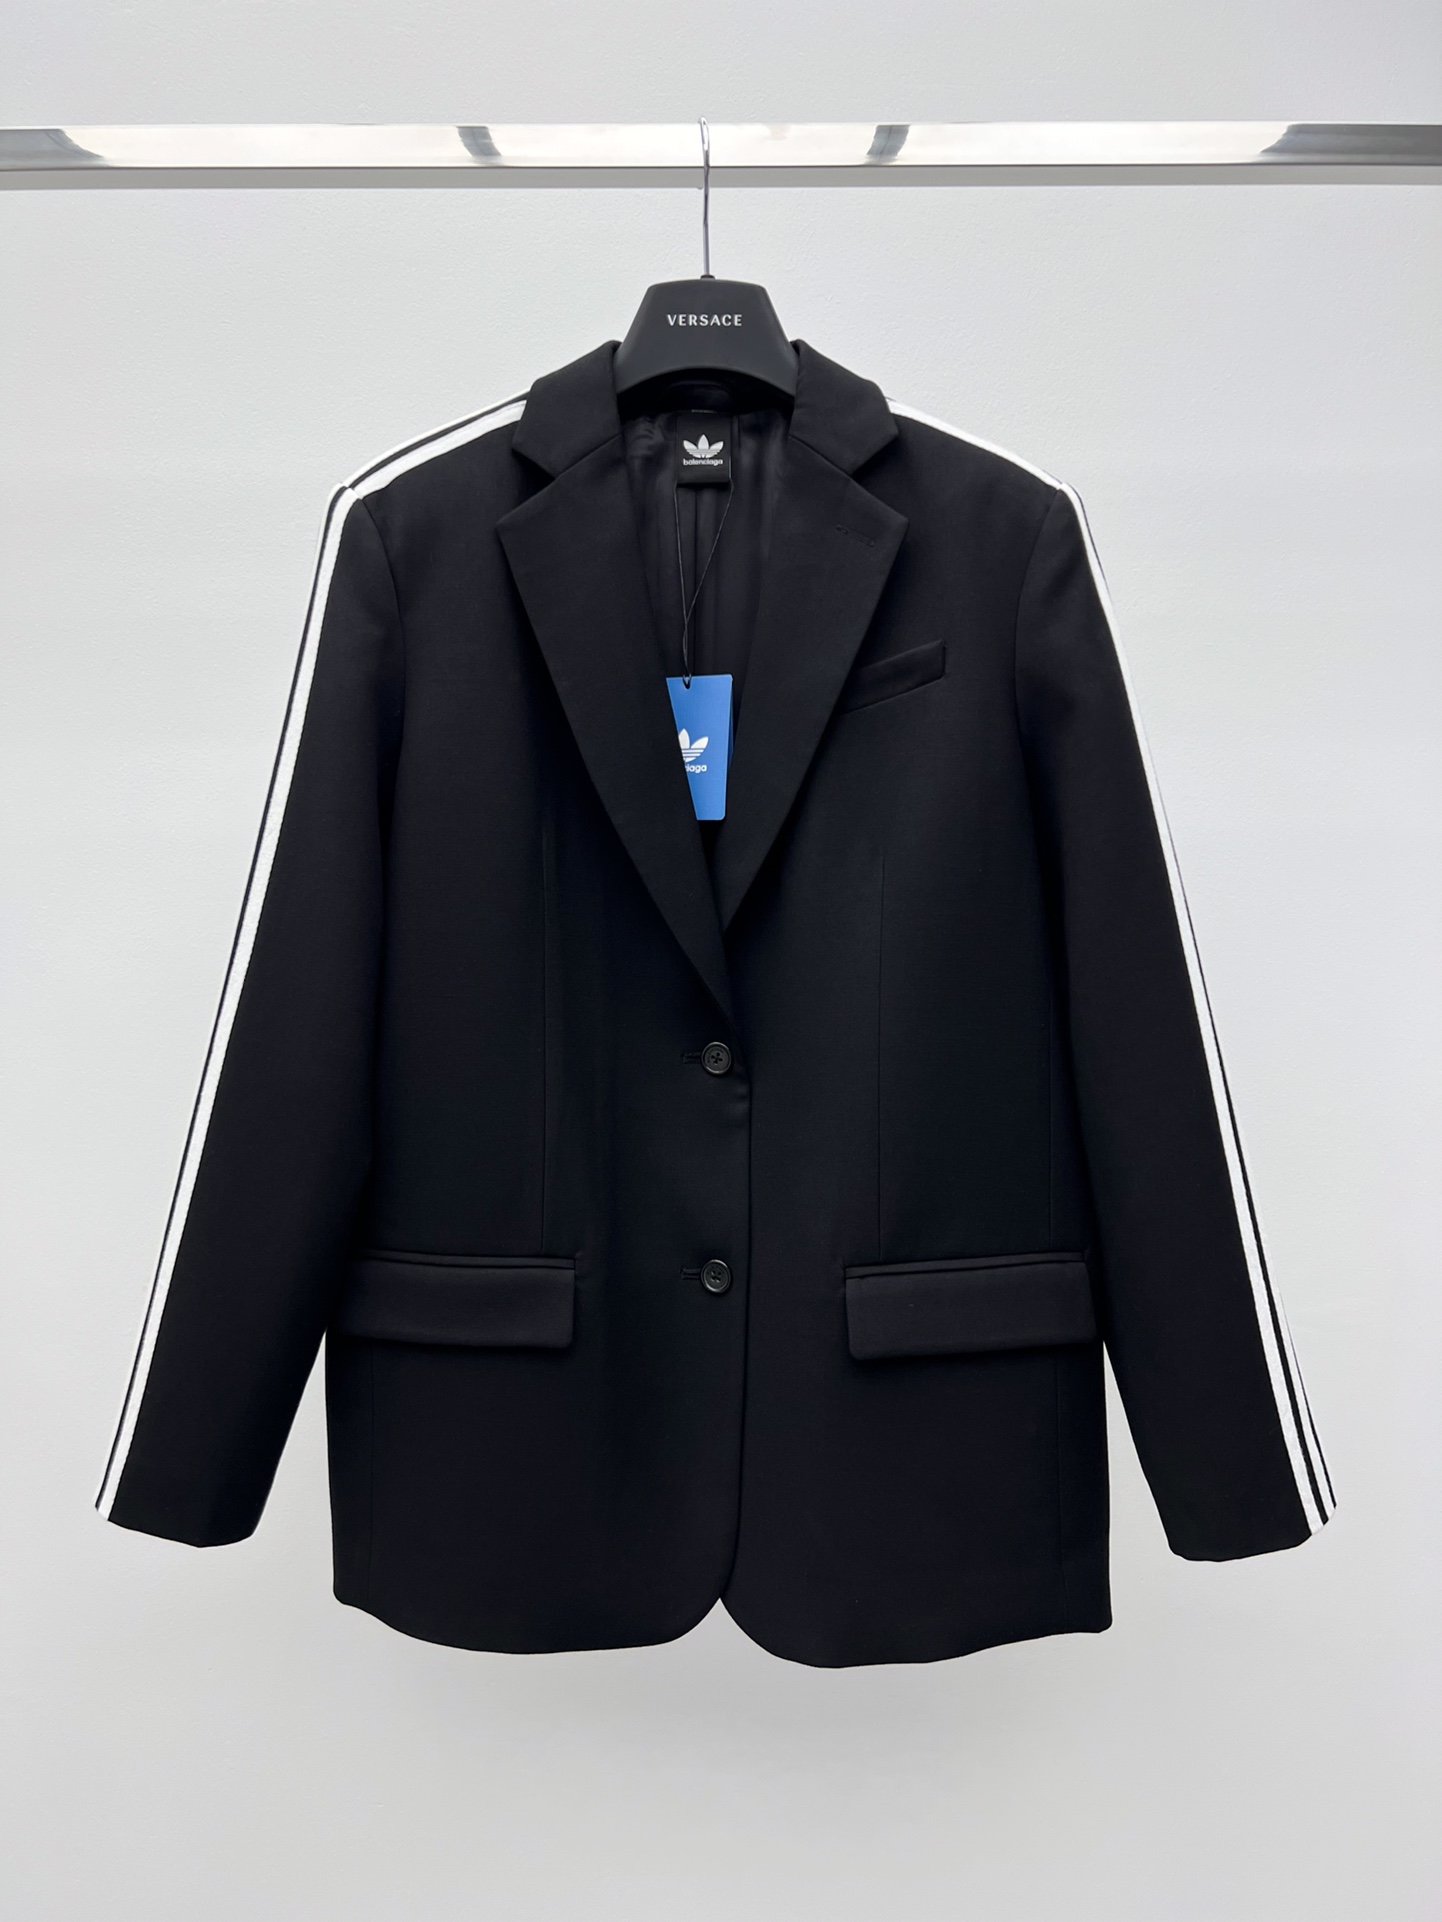 A jacket women's from strips Balenciaga x Adidas